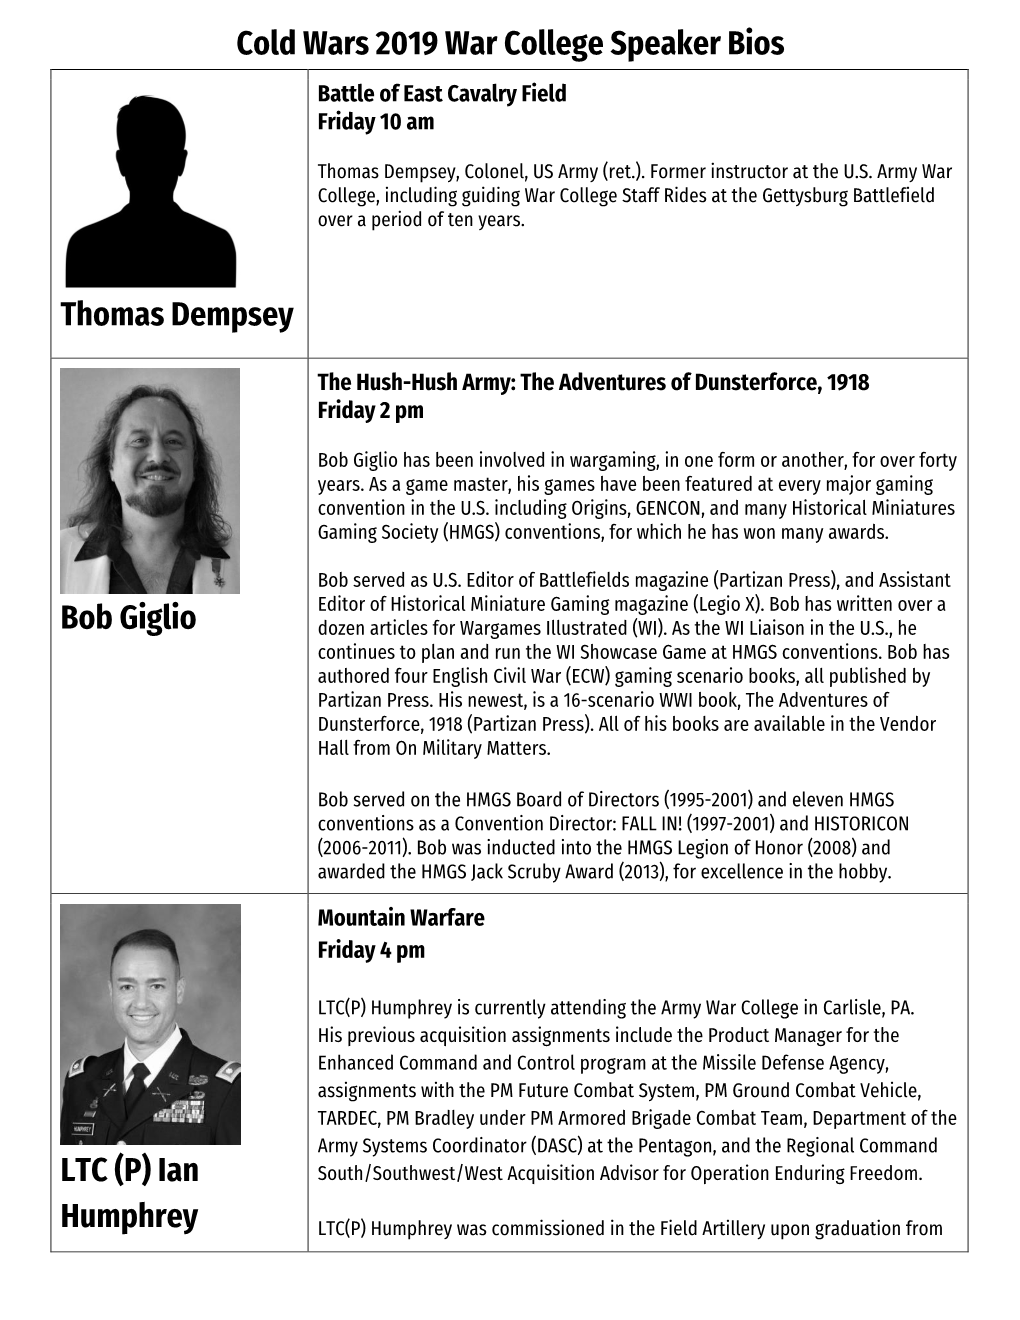 Cold Wars 2019 War College Speaker Bios Thomas Dempsey Bob Giglio LTC (P) Ian Humphrey